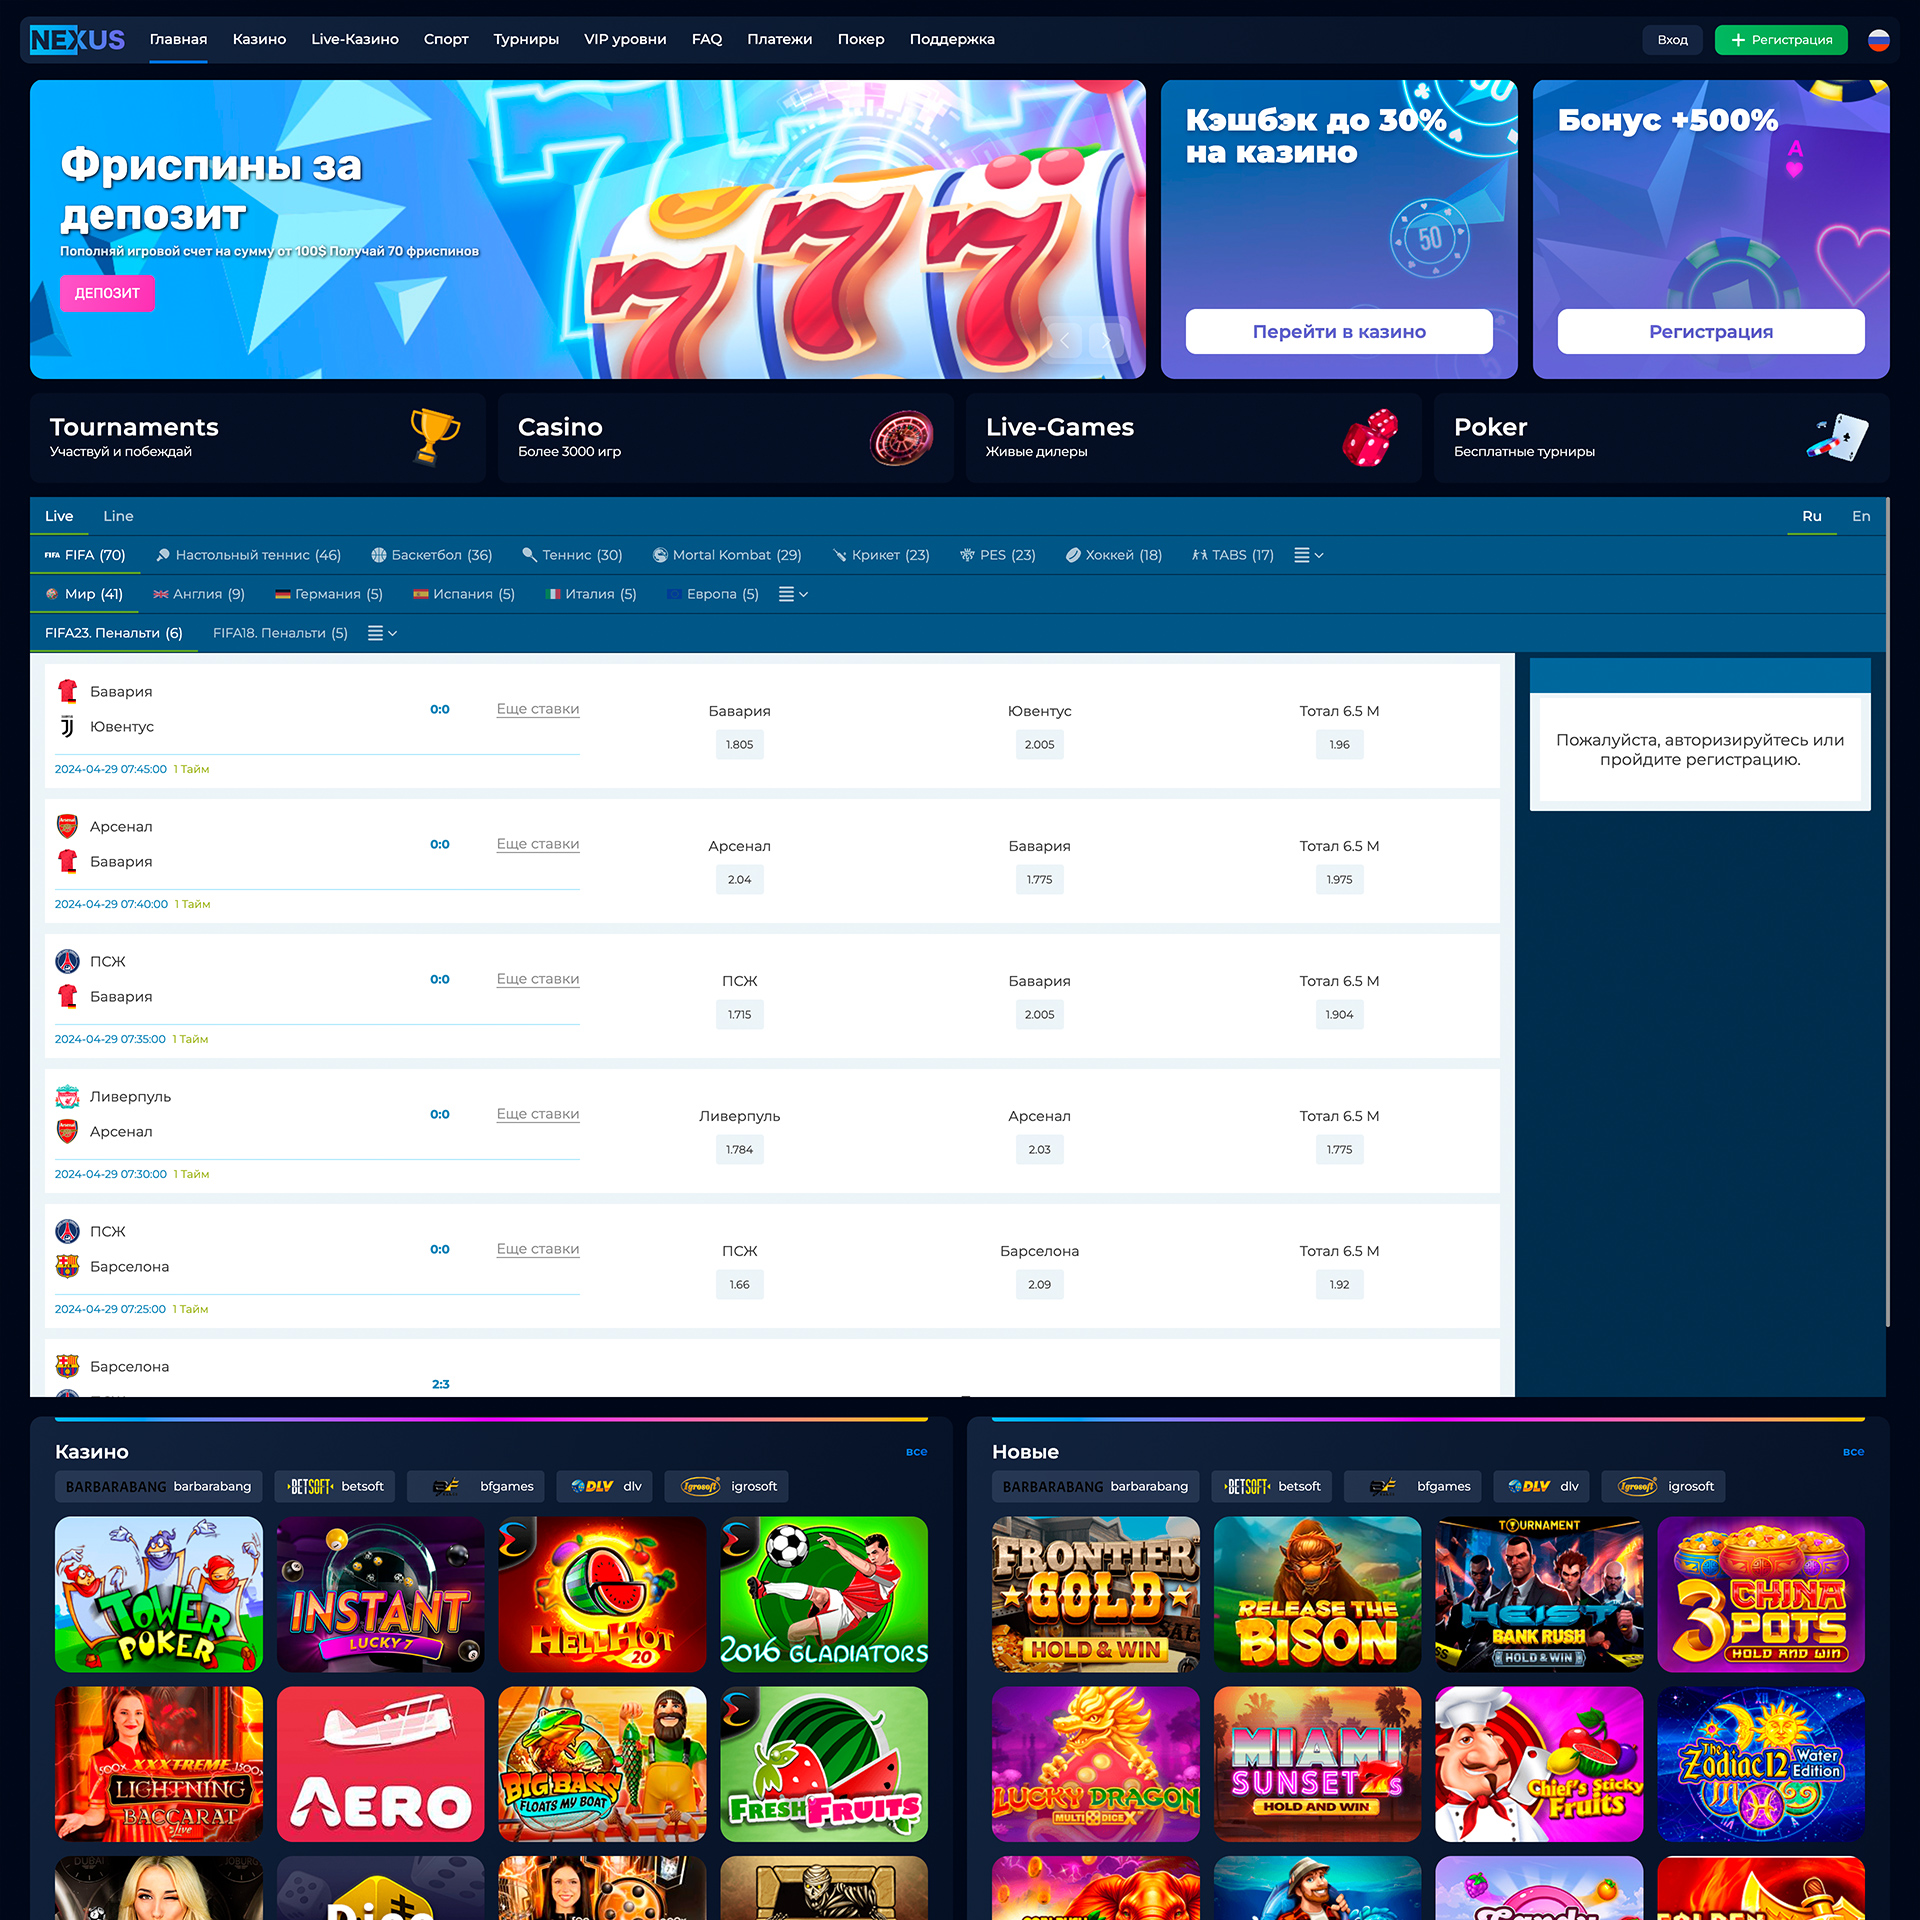 Online casino Nexus with betting module